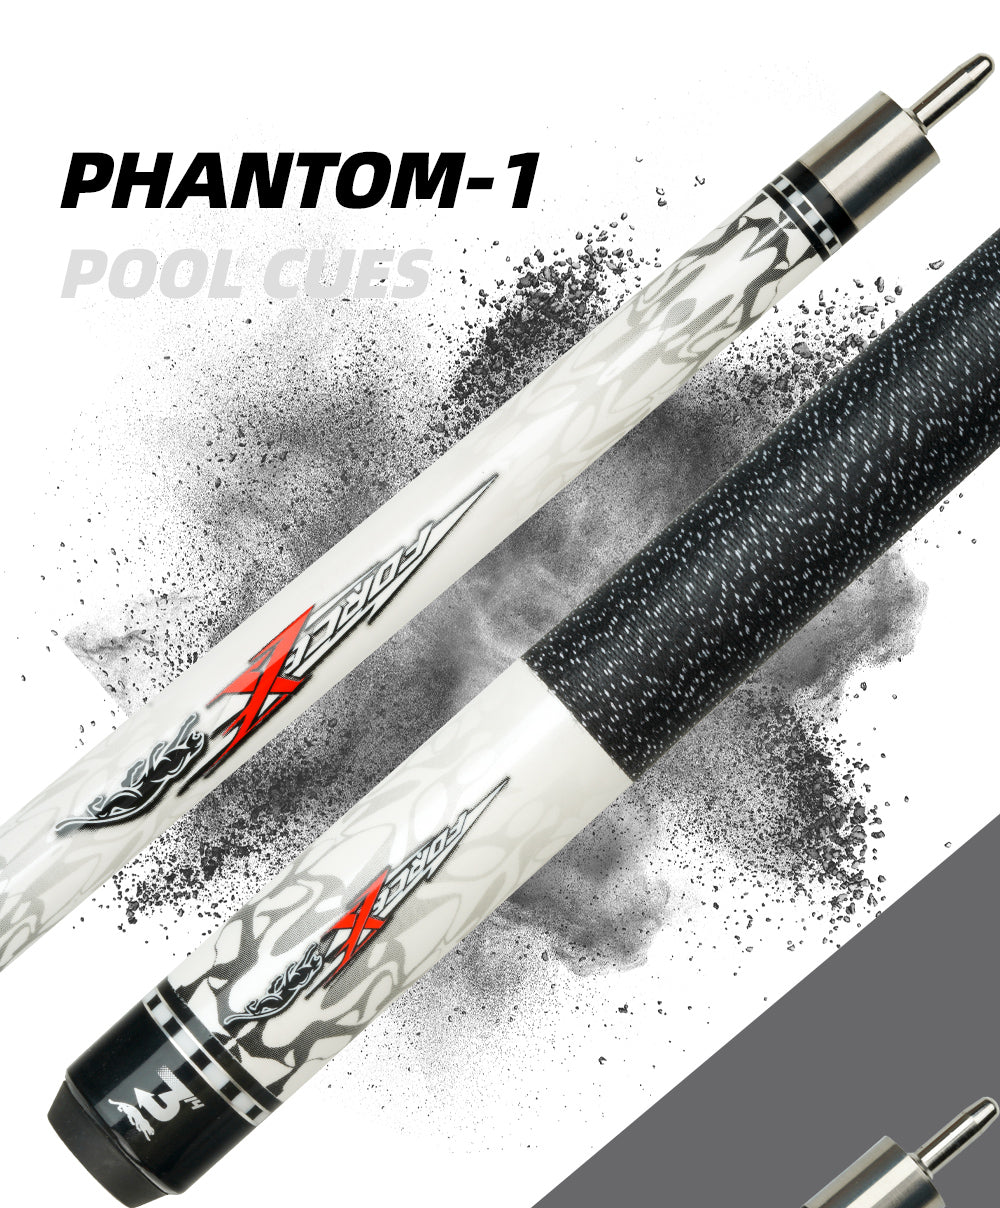 NEW PREOAIDR Cue 3142 Phantom Series Billiards 10/11.5/13mm Tip Maple Shaft Uniloc Joint Play Cue Stick Technology Kit Black 8